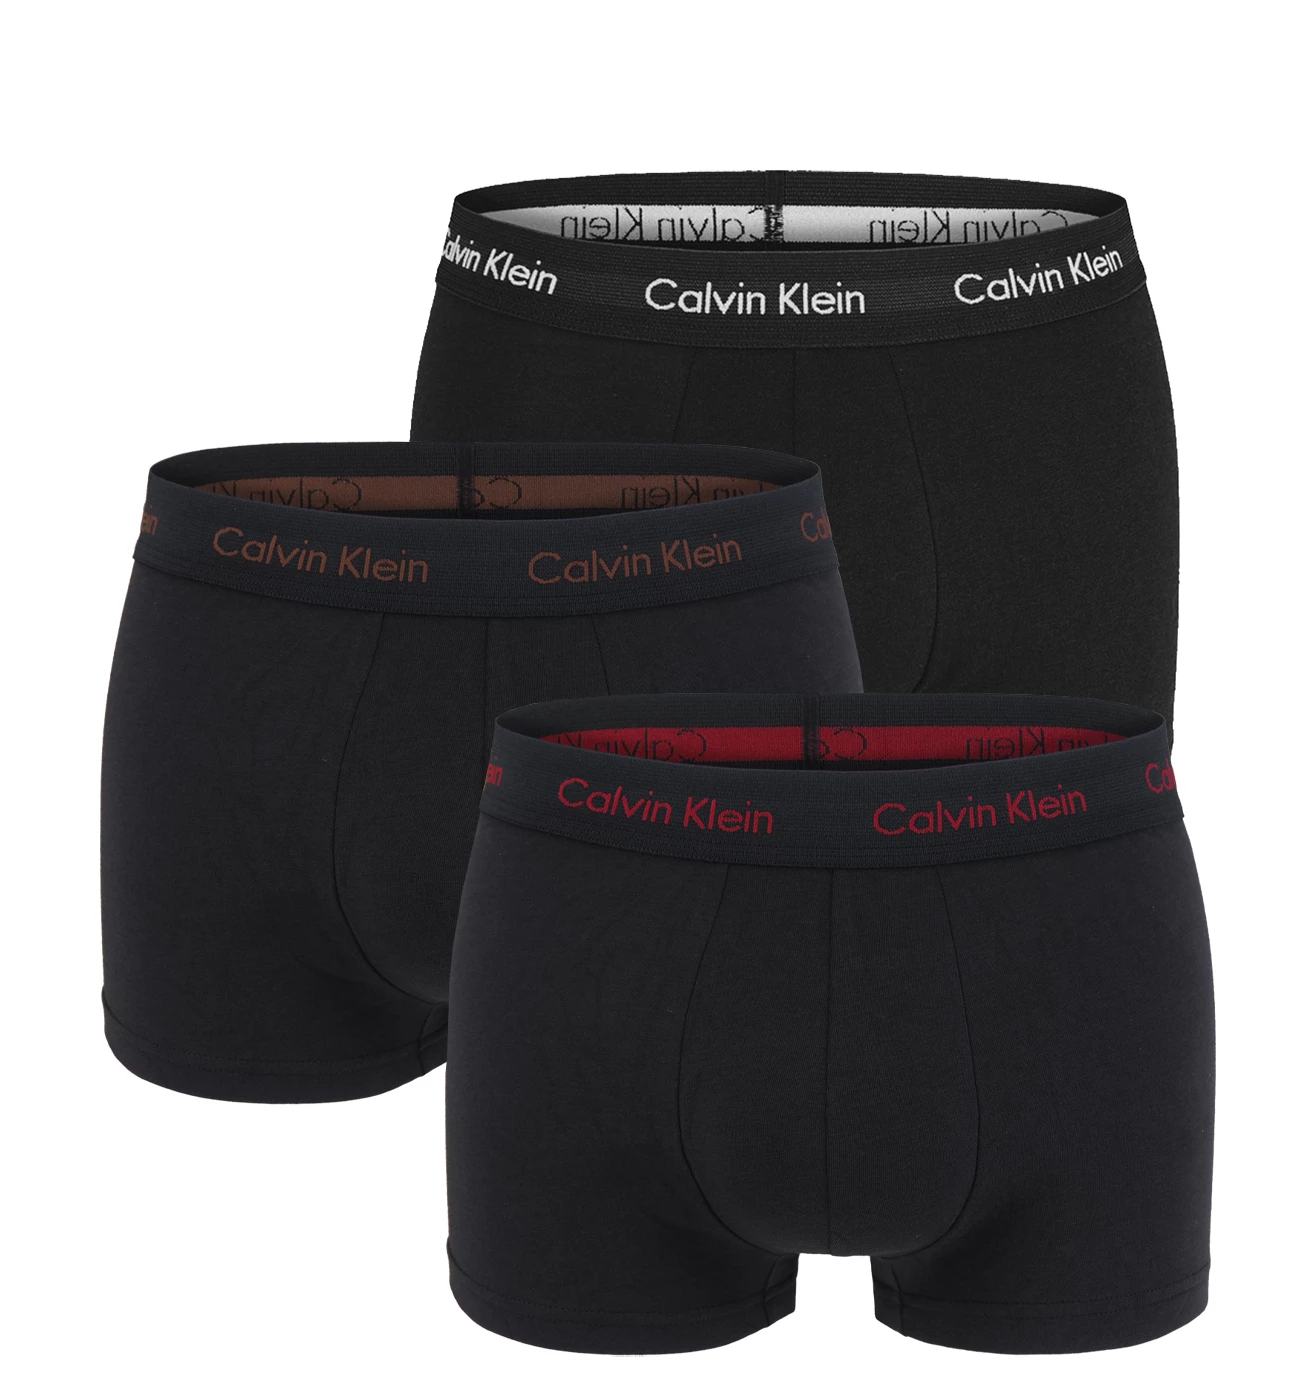 Calvin Klein - boxerky 3PACK cotton stretch black with color waist logo - limitovaná edícia